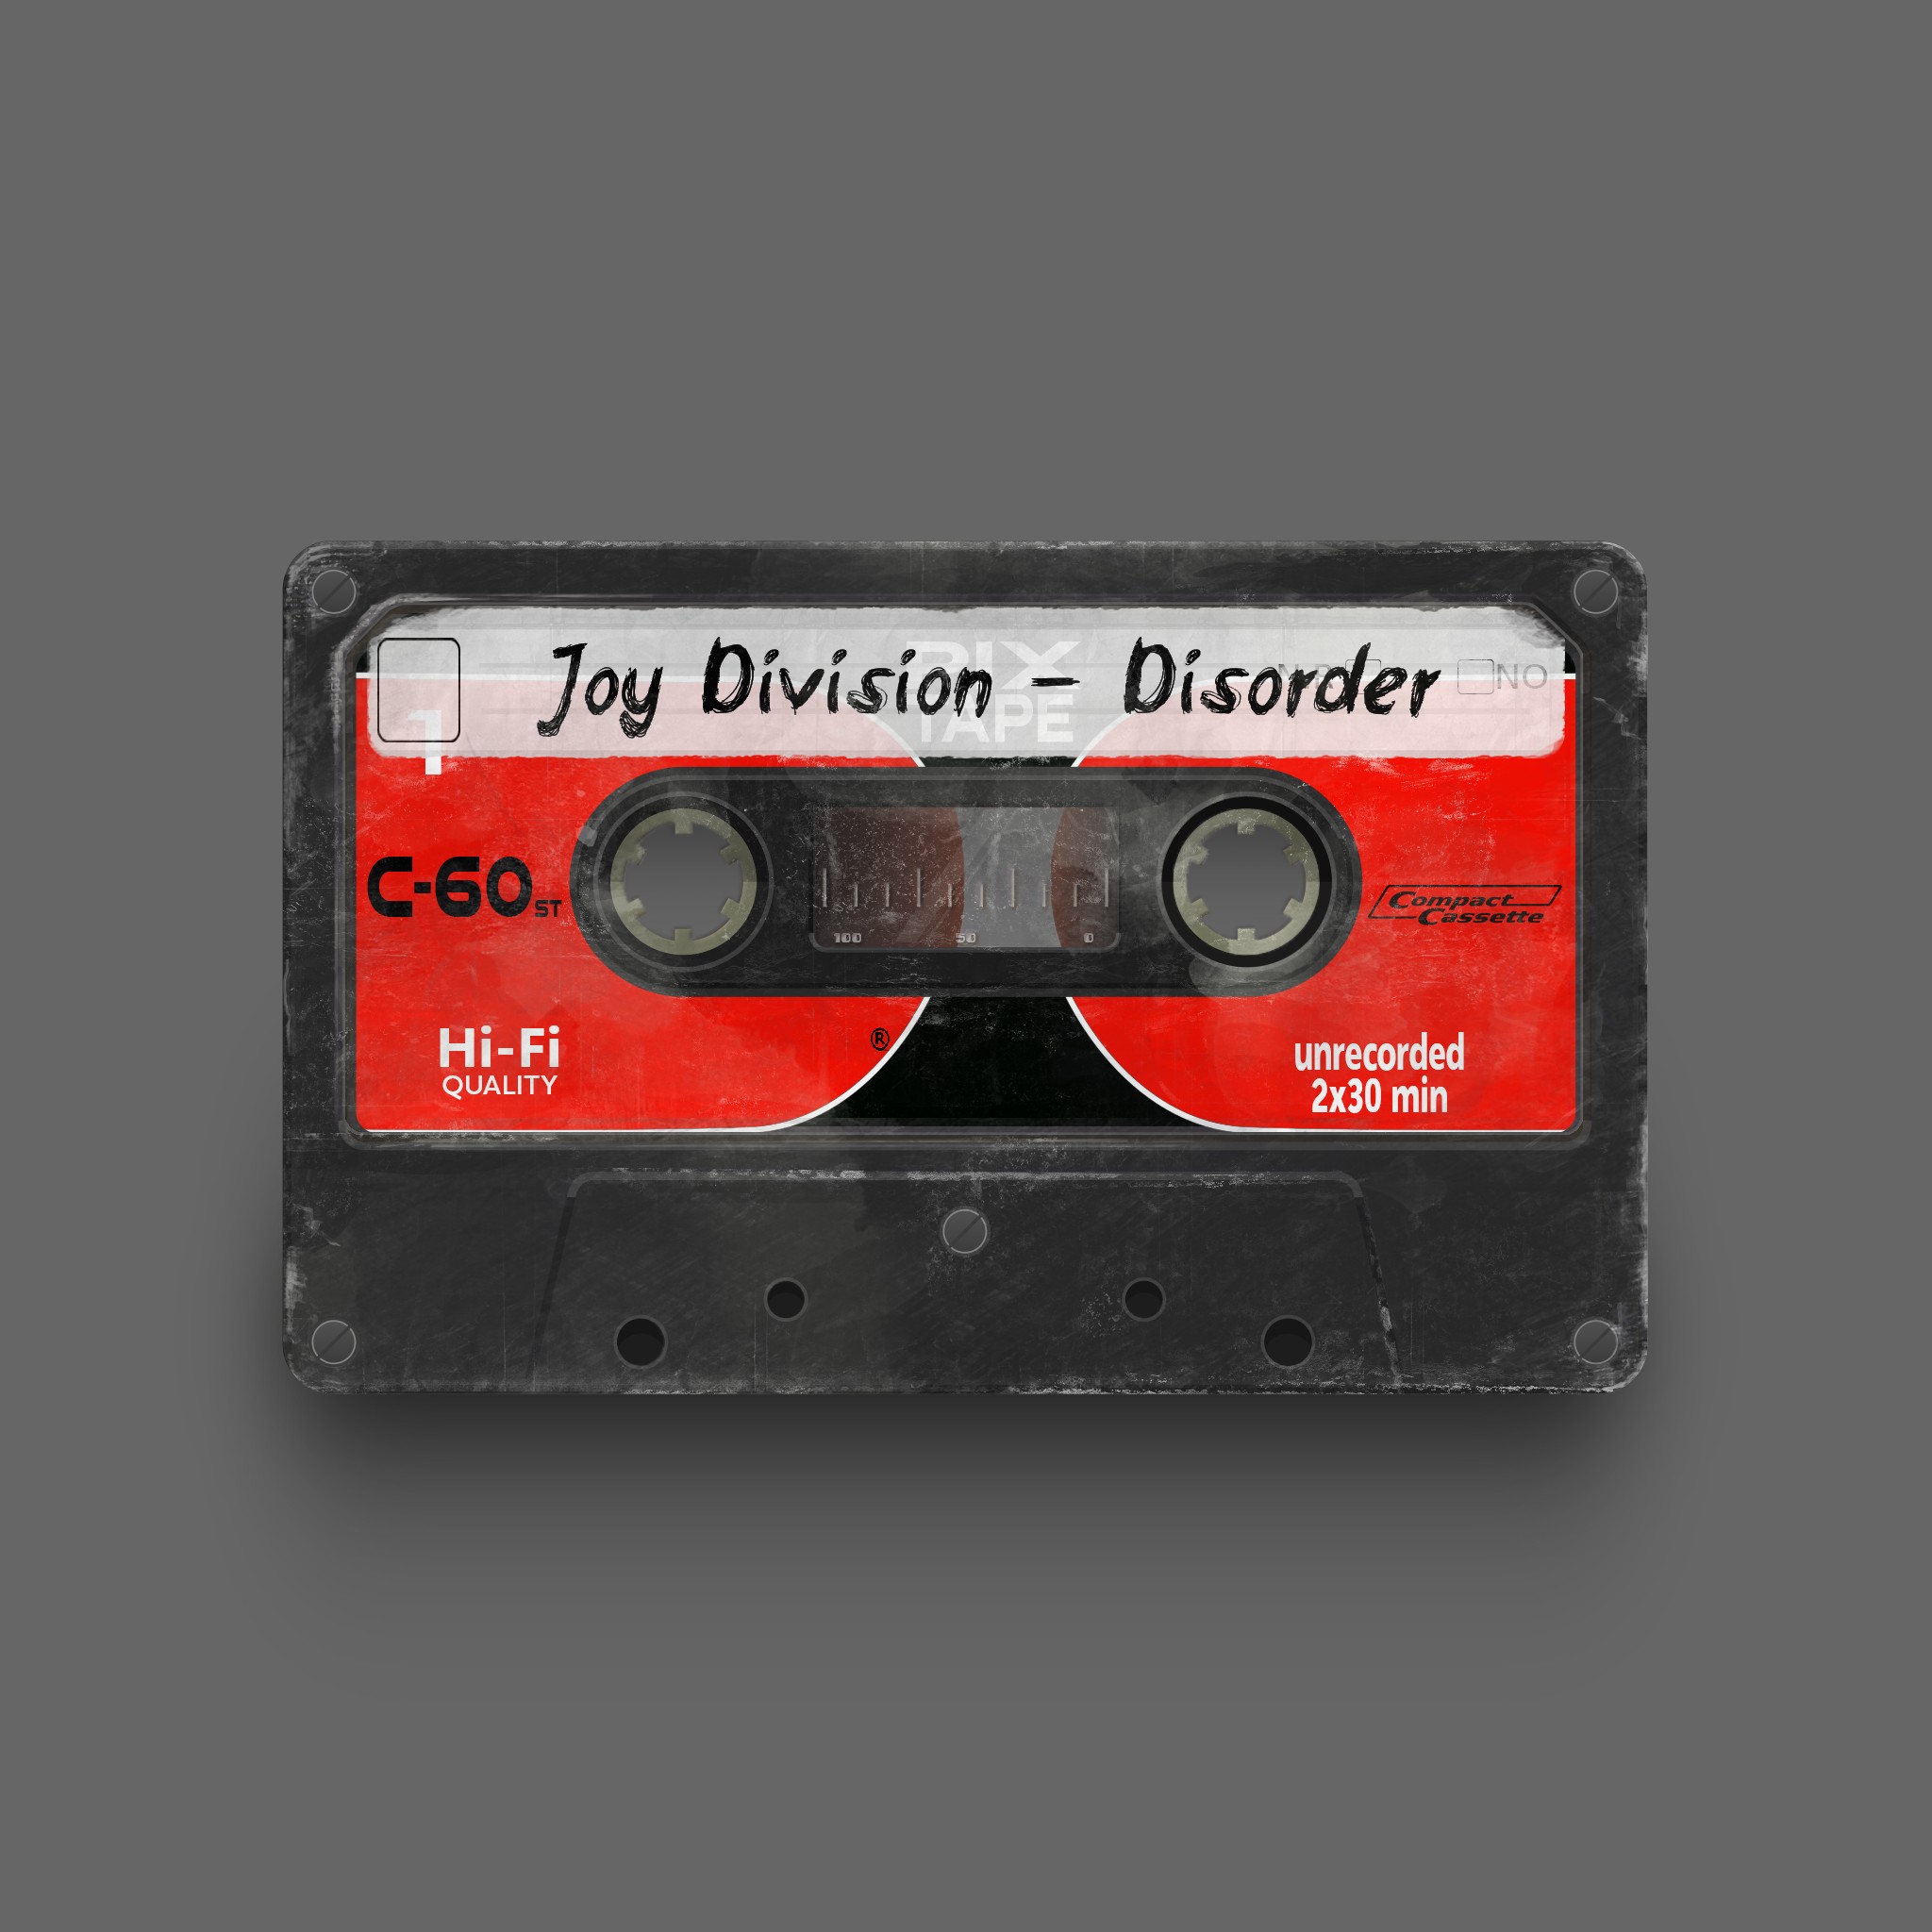 PixTape #9289 | Joy Division - Disorder